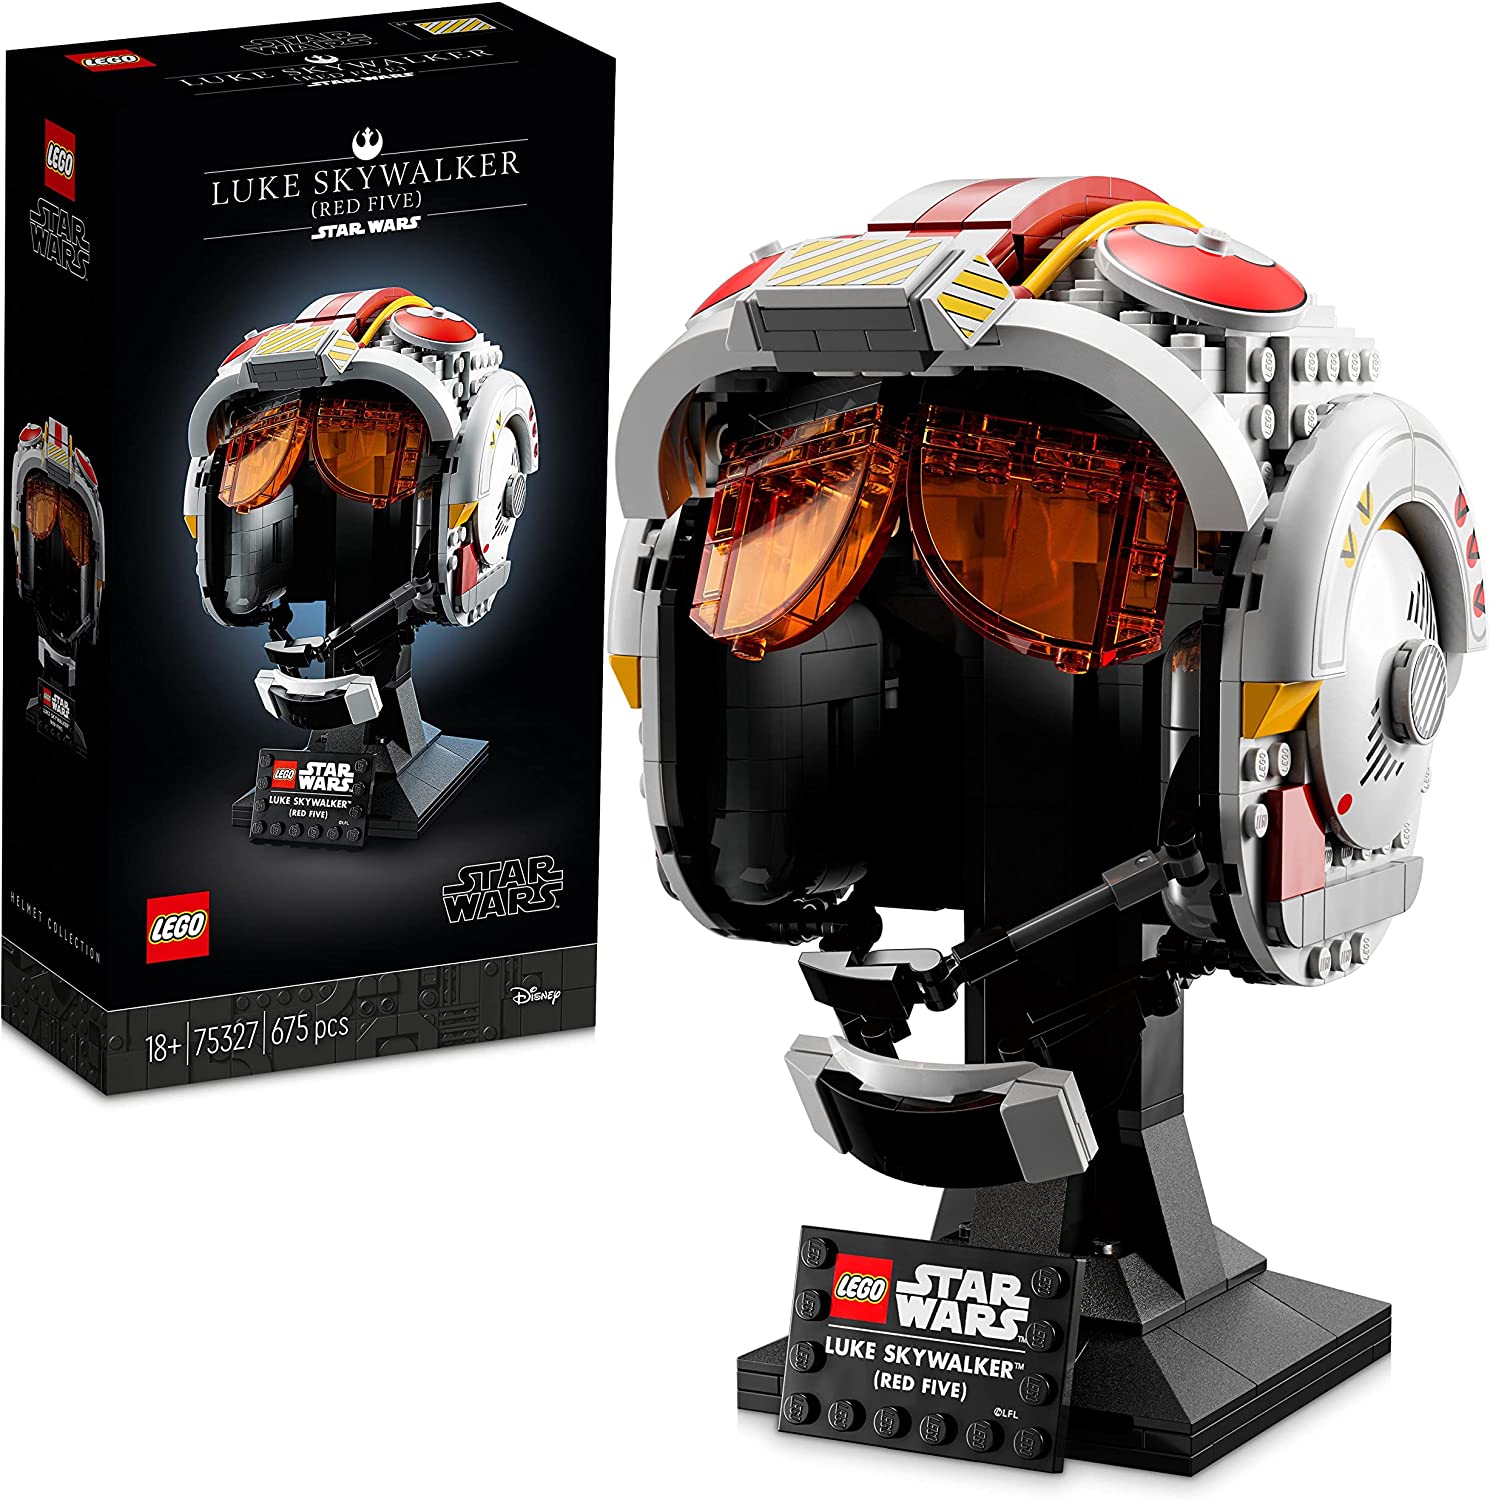 LEGO 75327 Star Wars Helmet by Luke Skywalker (Red Five) Model Collectable 